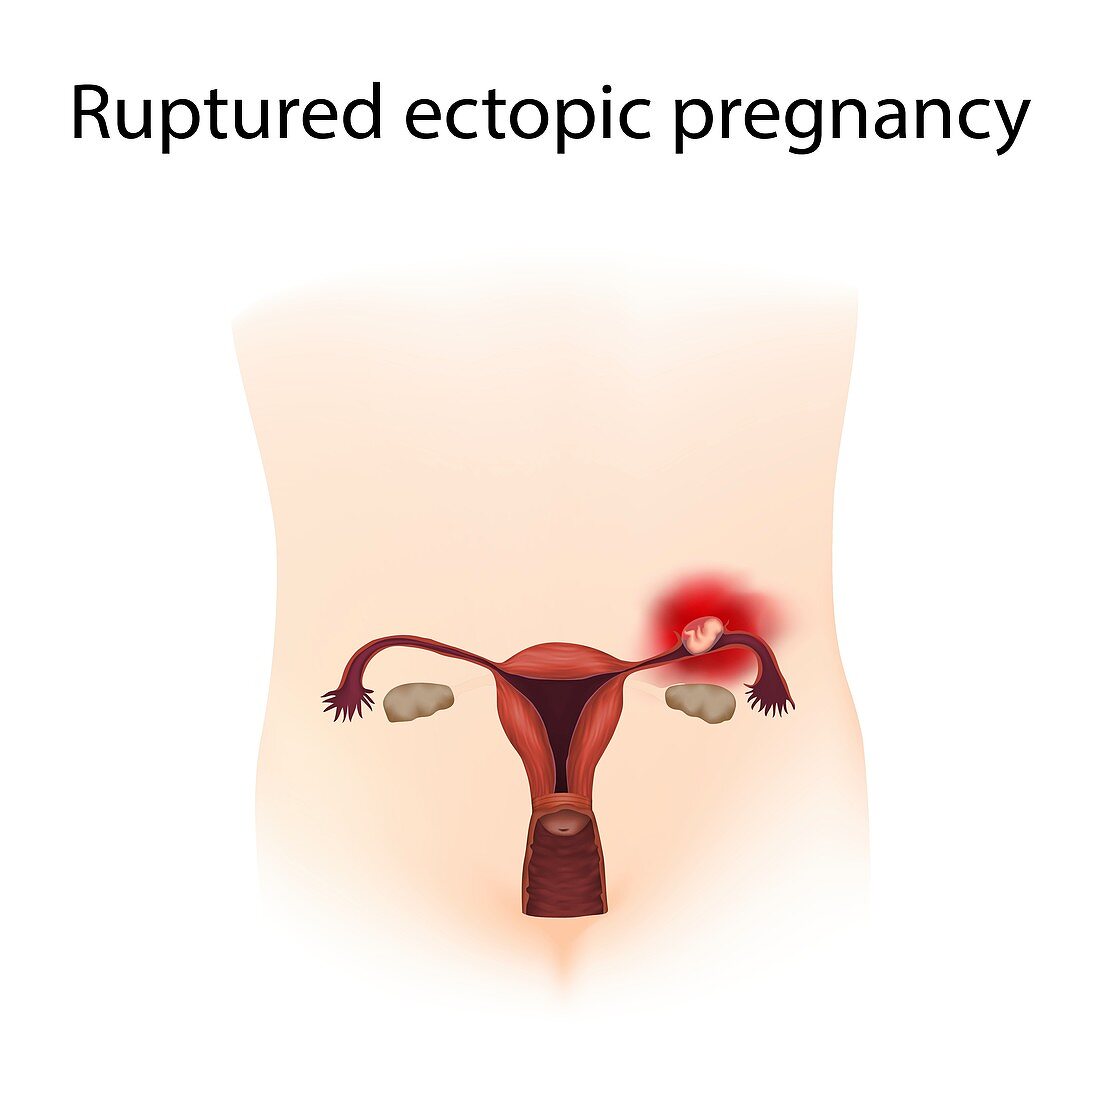 Ruptured ectopic pregnancy,illustration